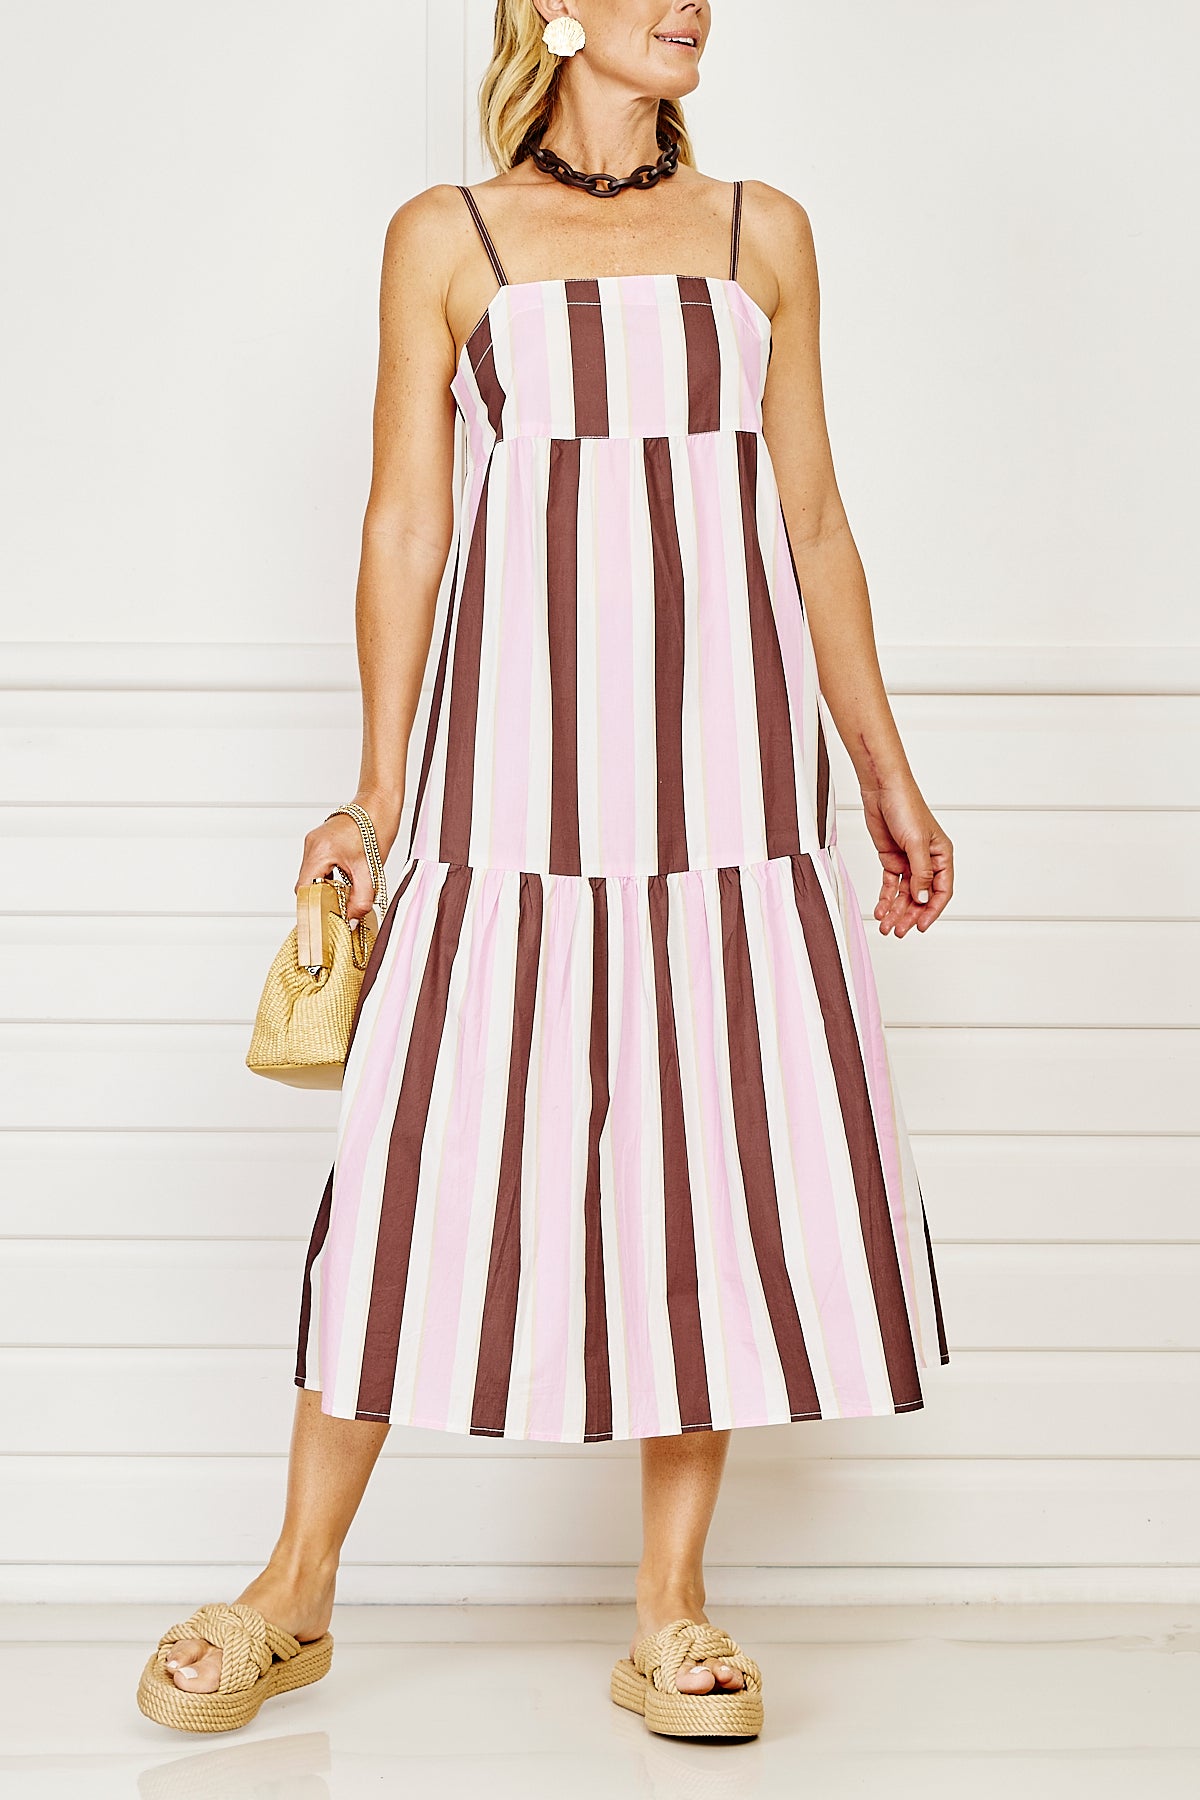 Pondicherry Maxi Sun Dress - Pink & Choc stripe